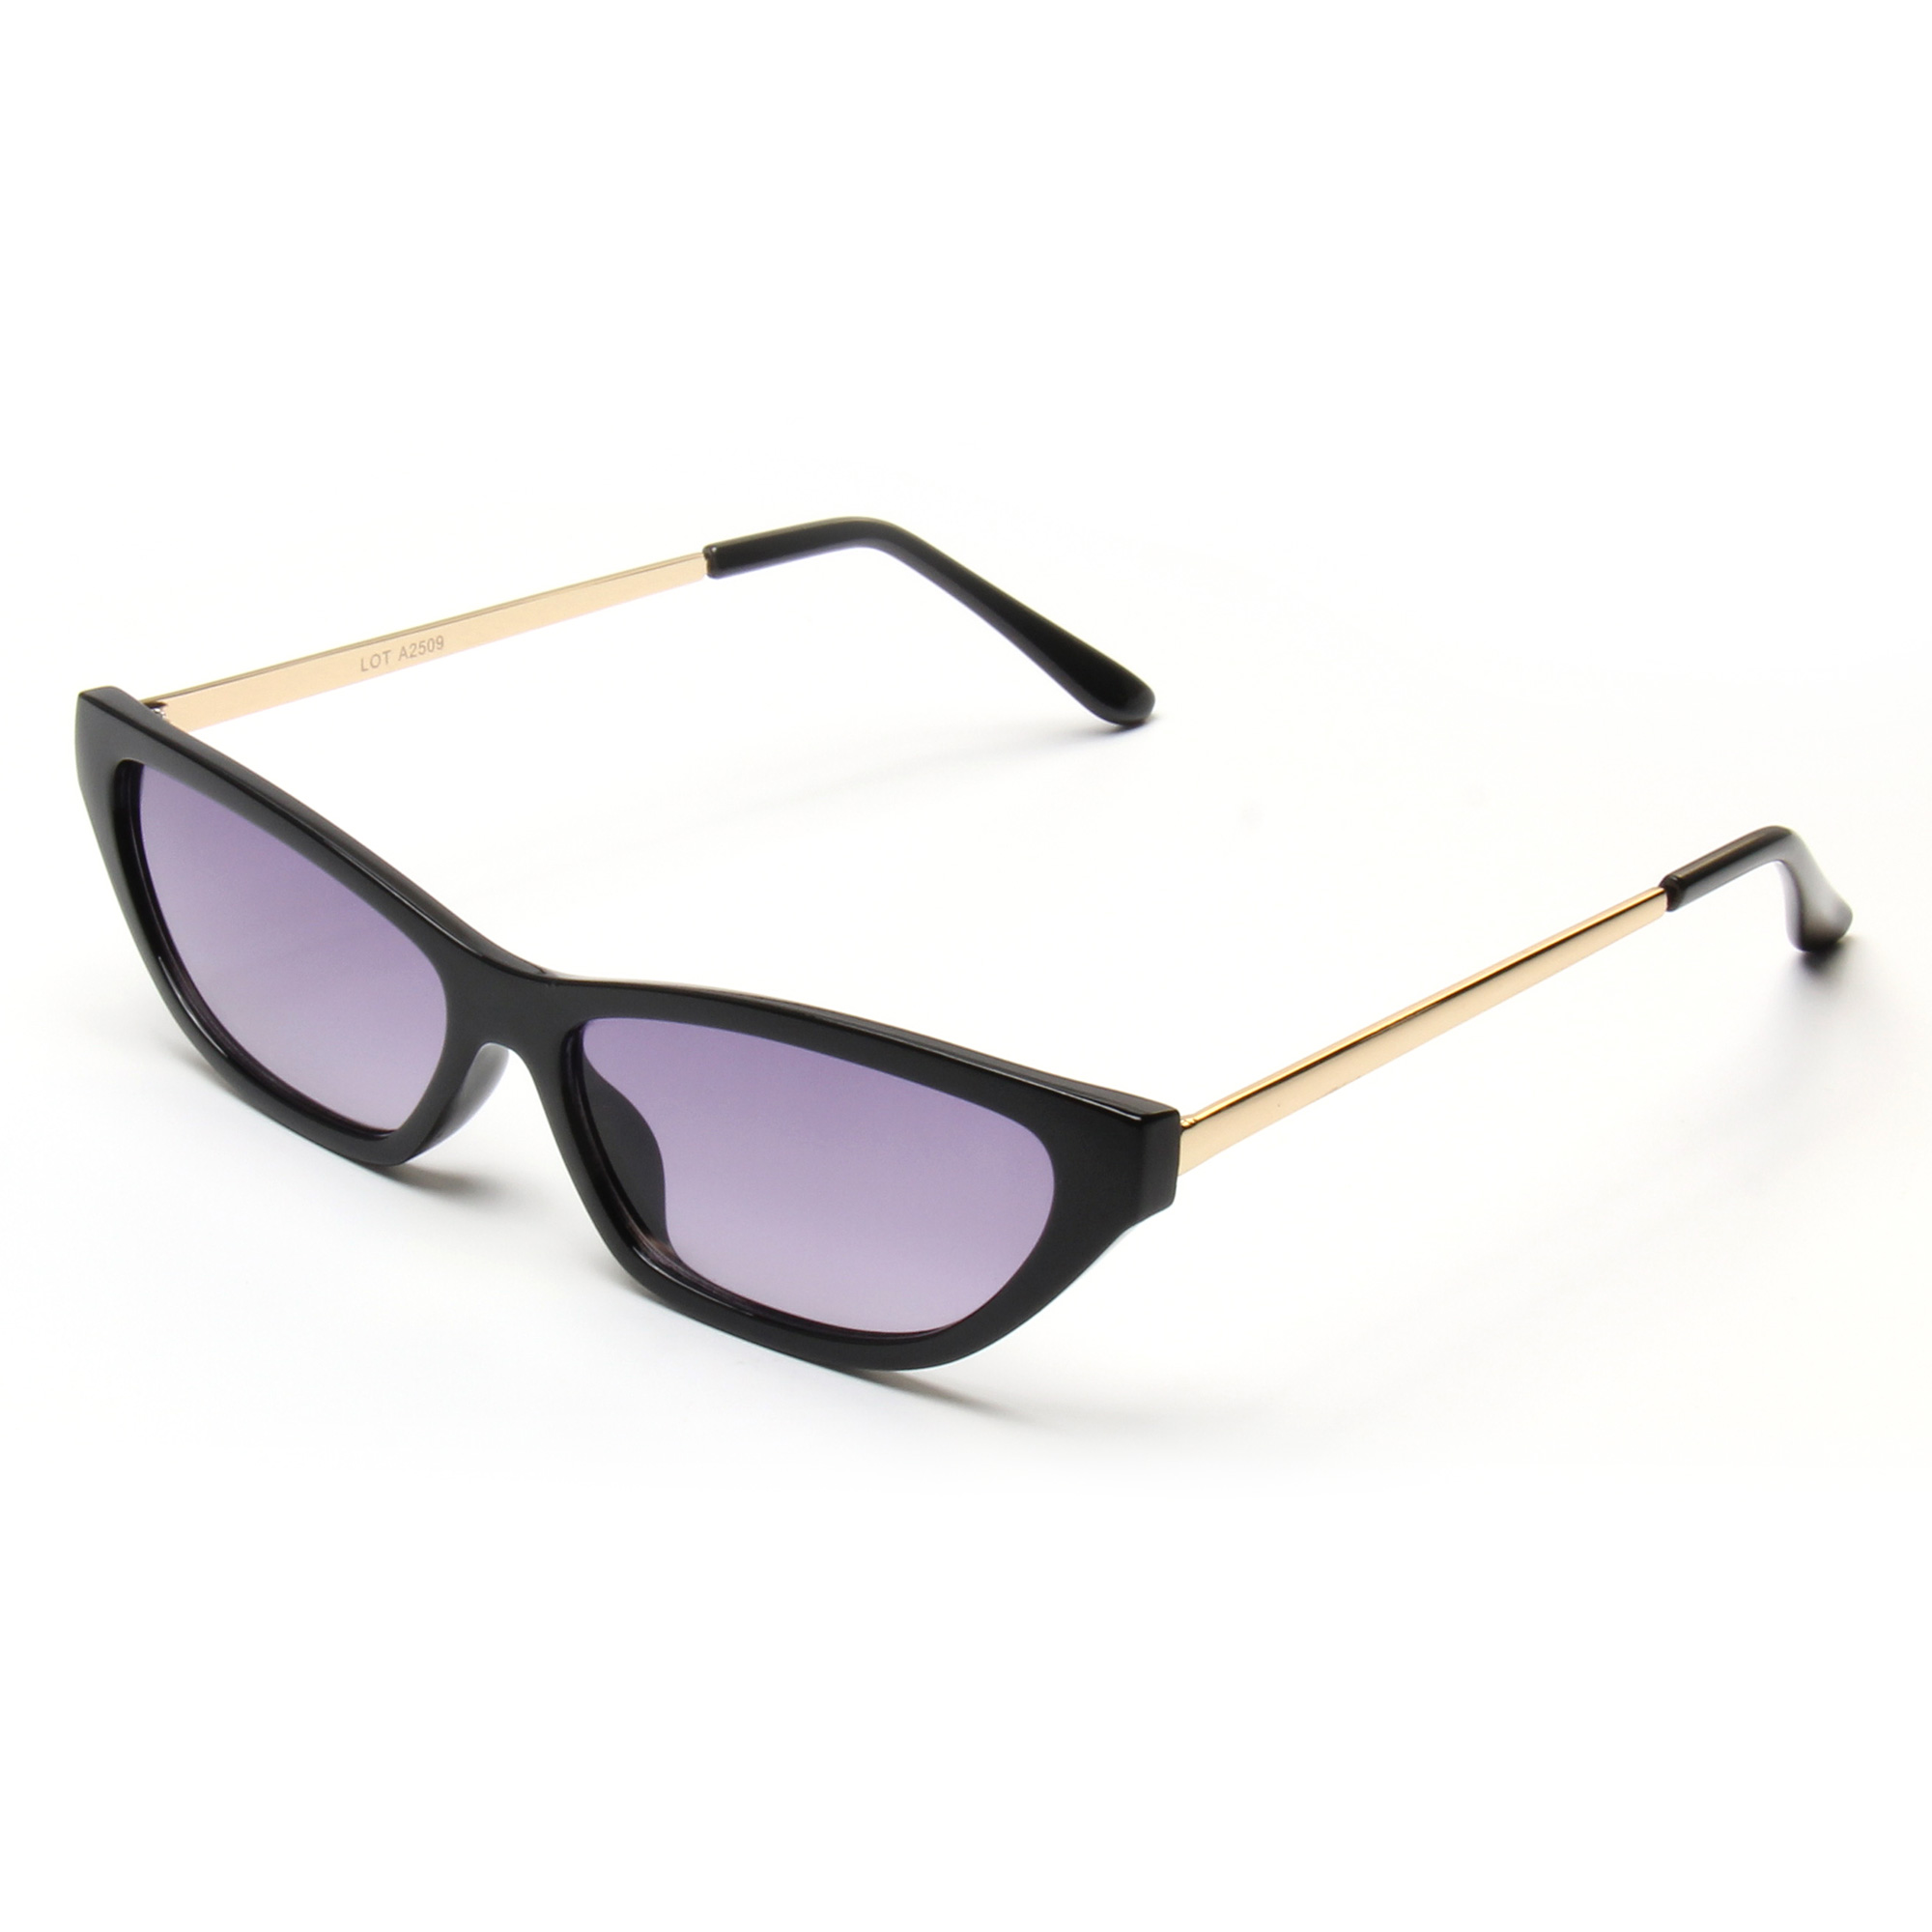 Eugenia women fashion sunglasses elegant for Eye Protection-1